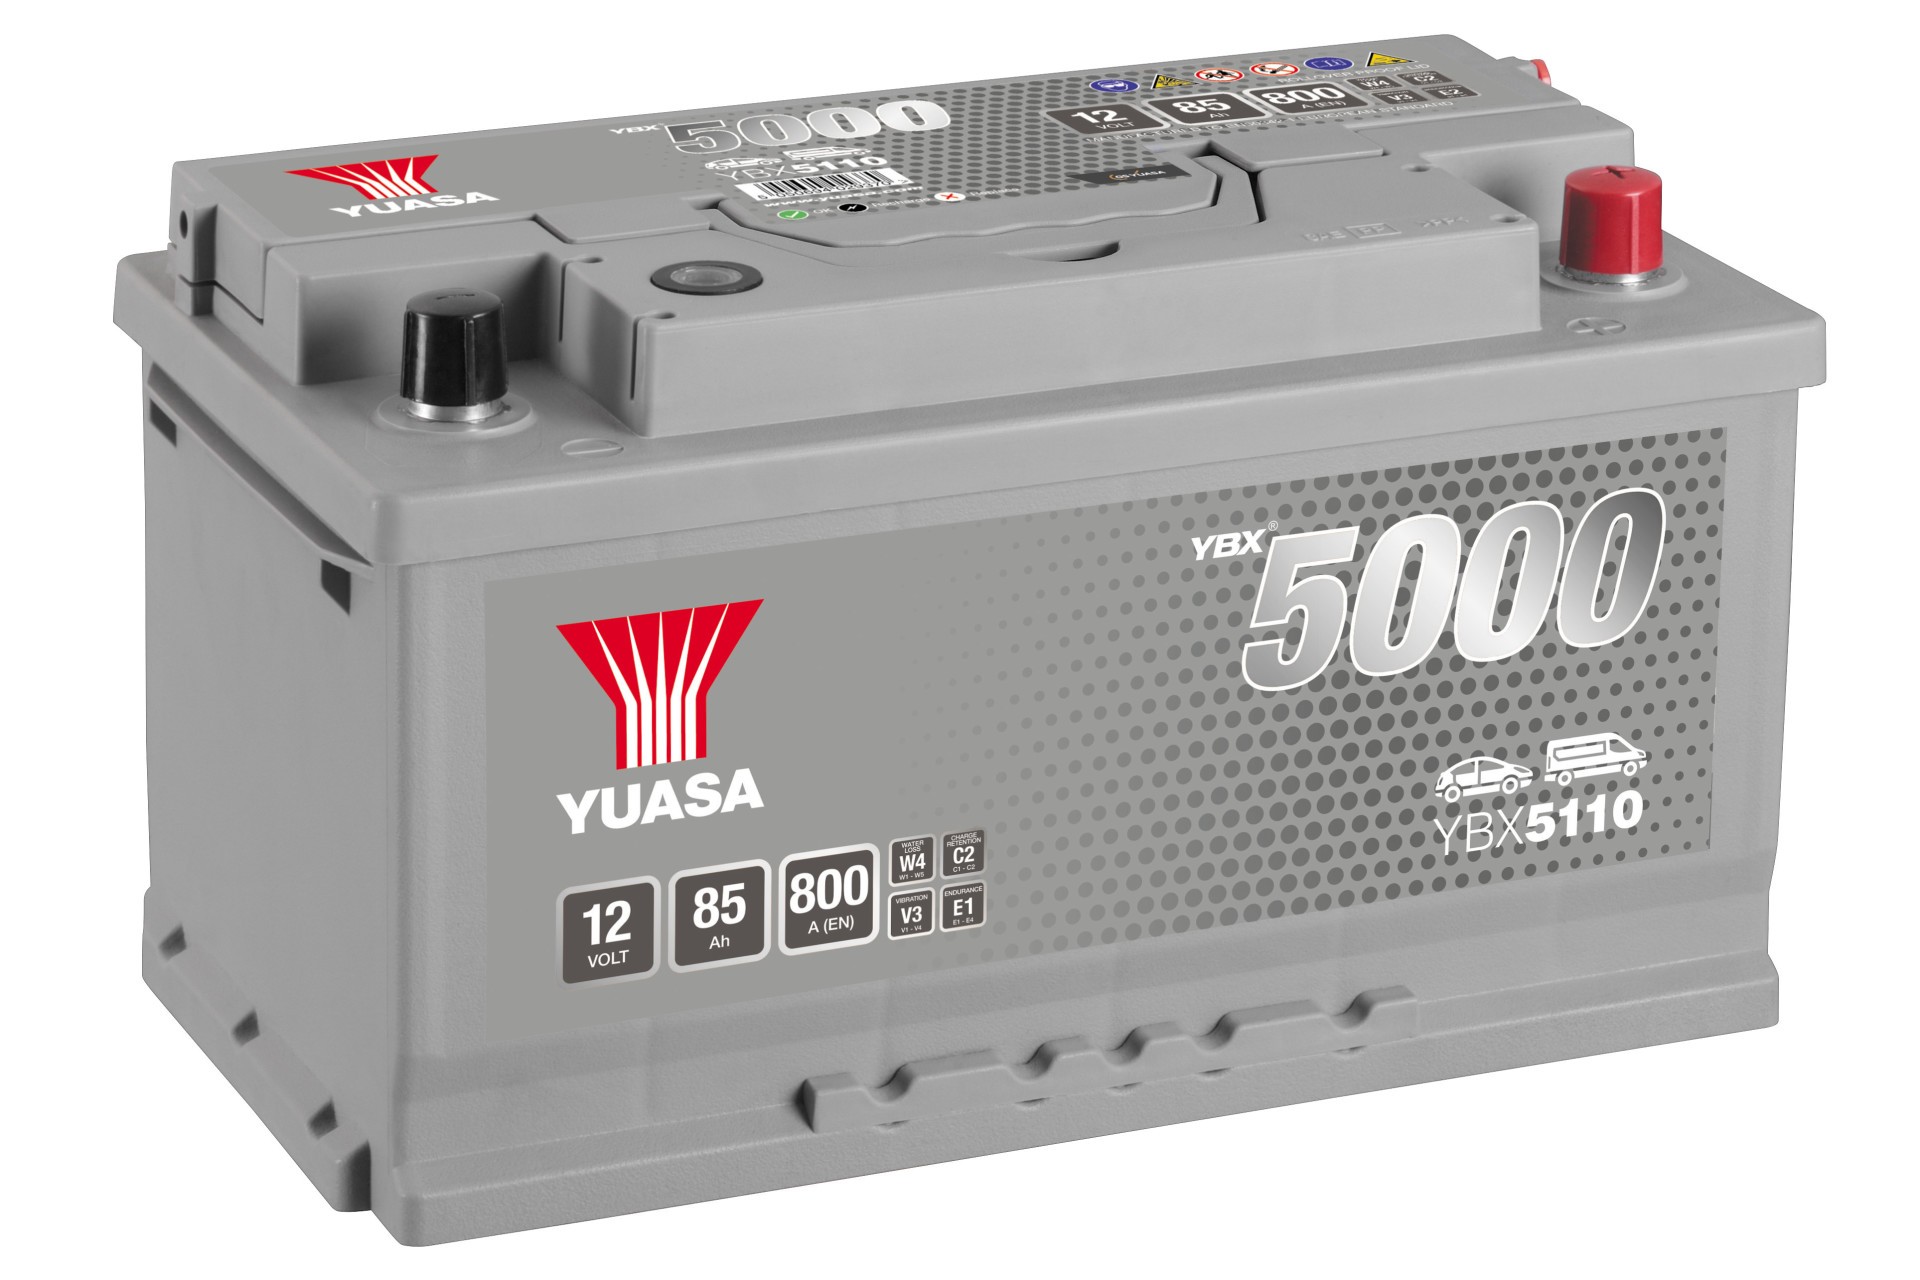 YUASA Autobatterie, Starterbatterie 12V 85Ah 800A 4.79L